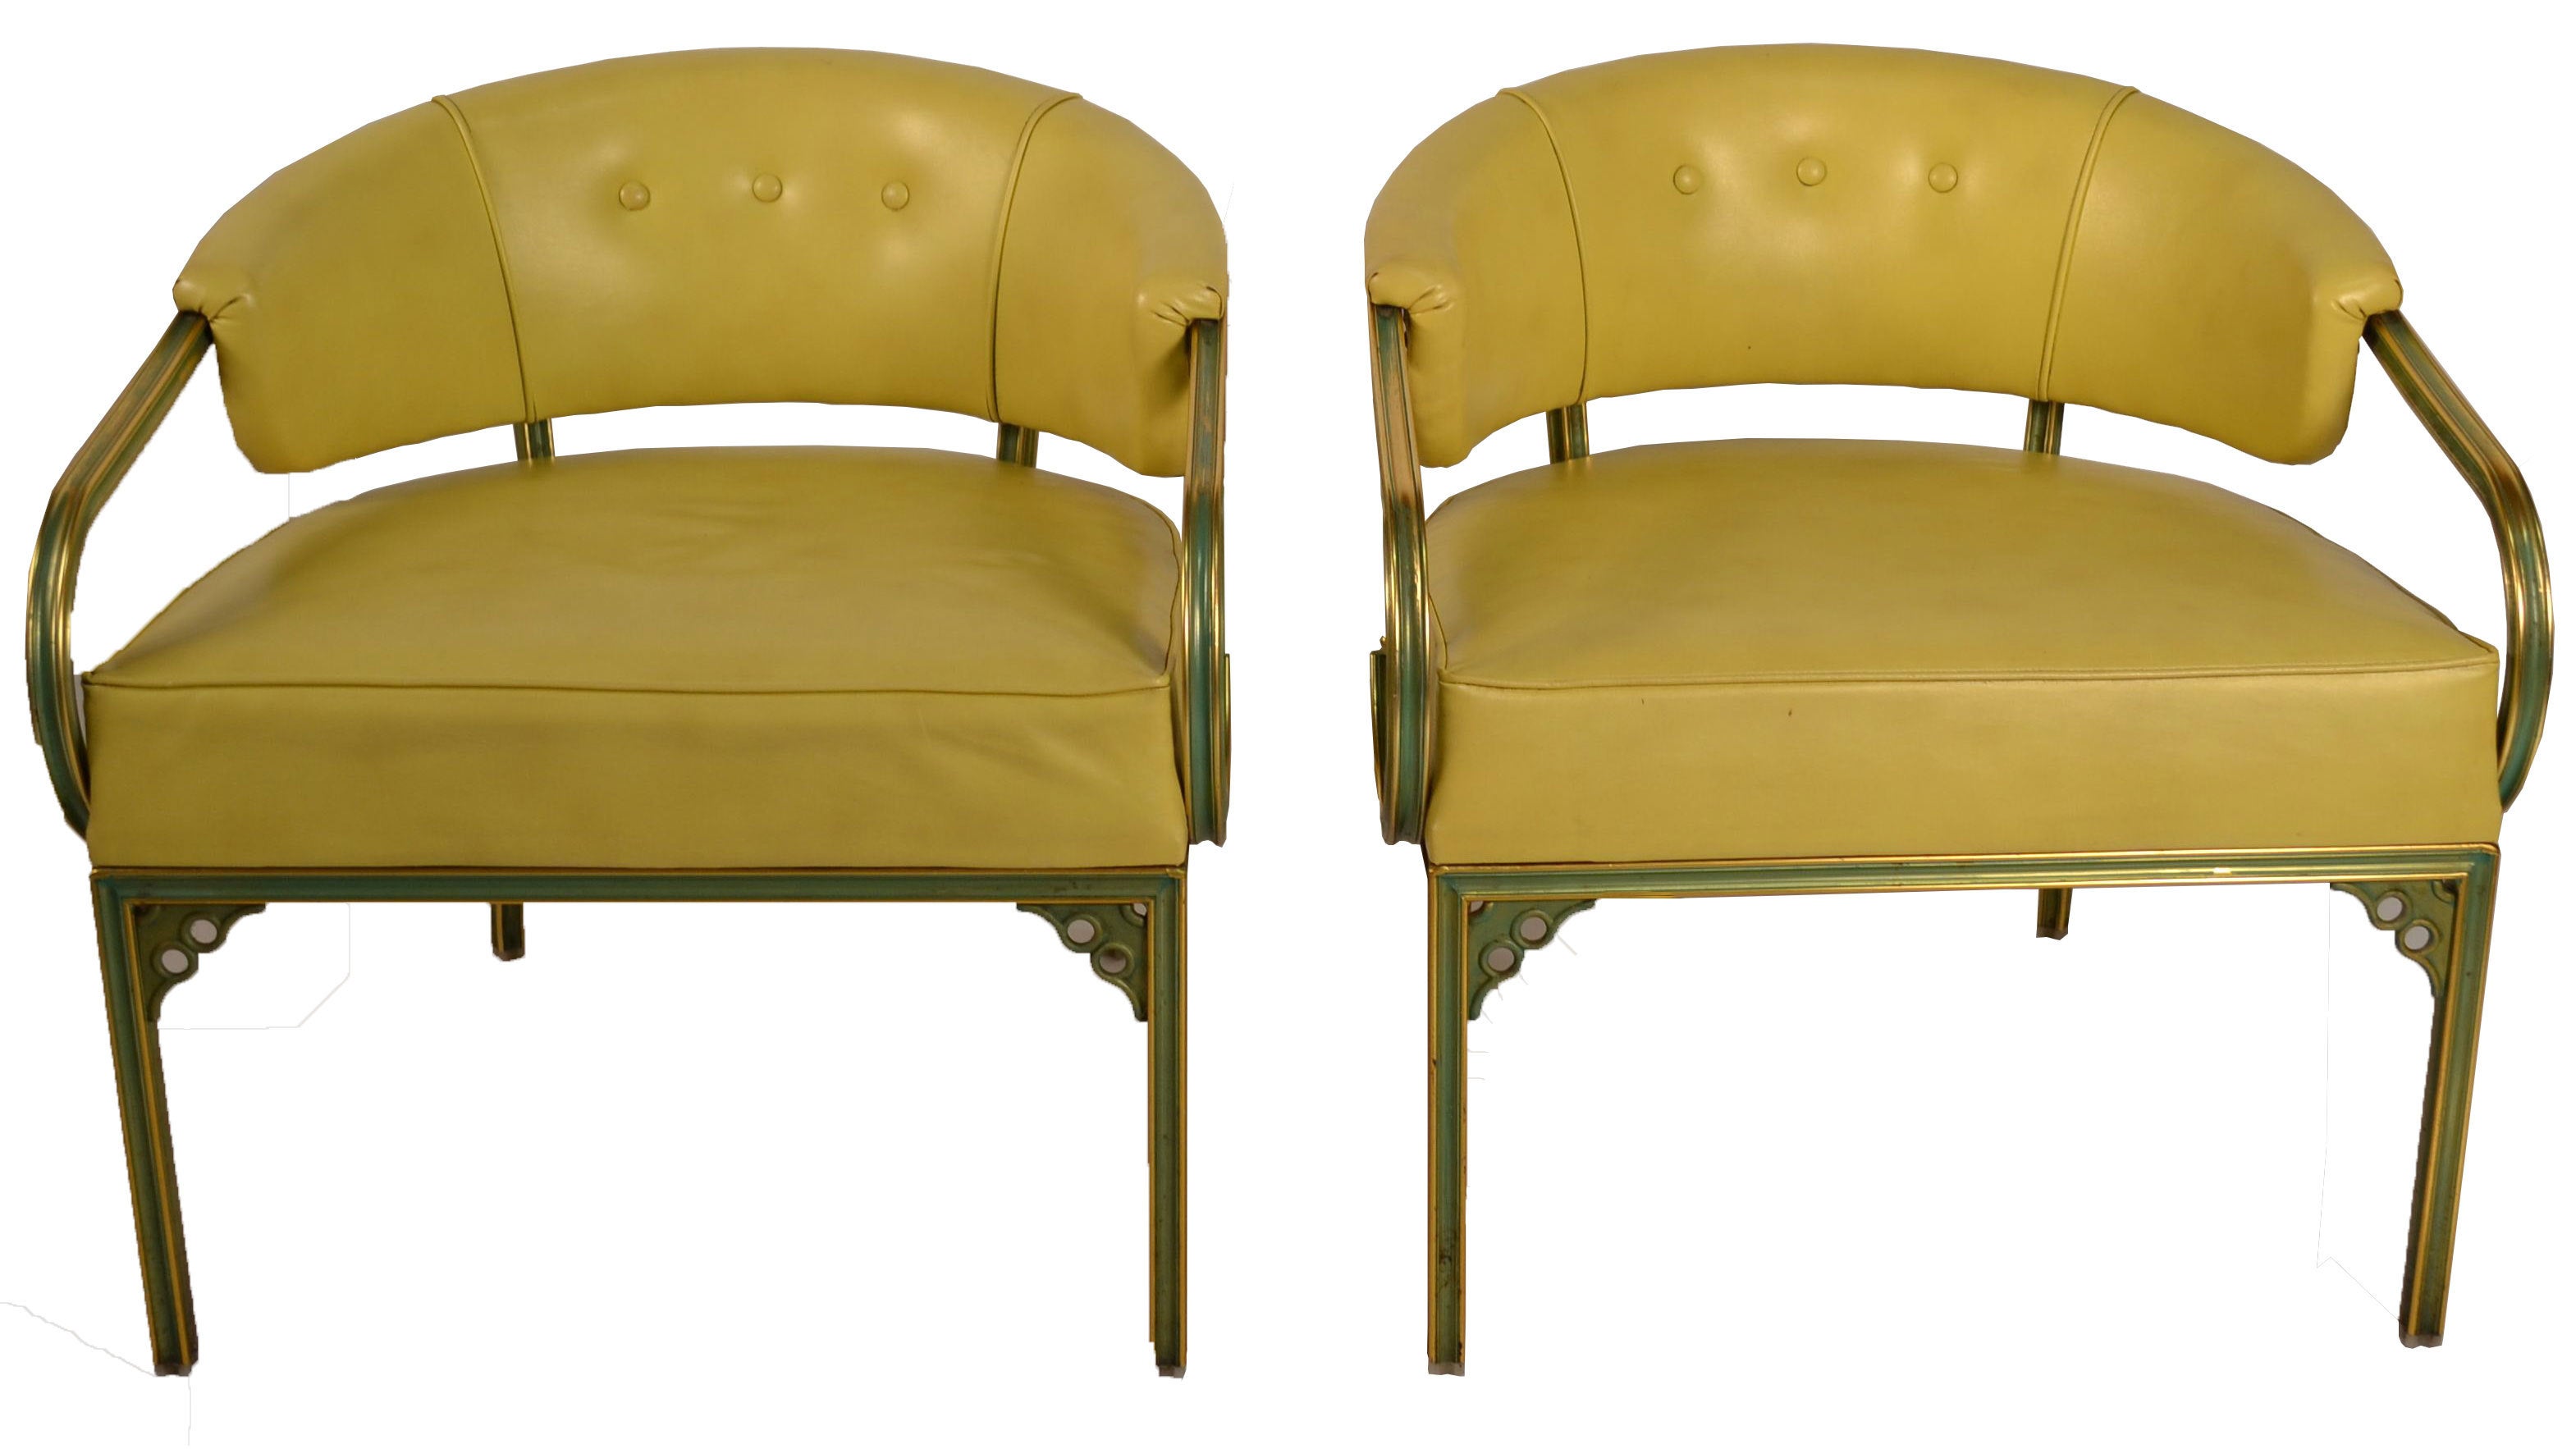 Pair of Troy Sunshade Company “Cymbal” Line Lounge Chairs